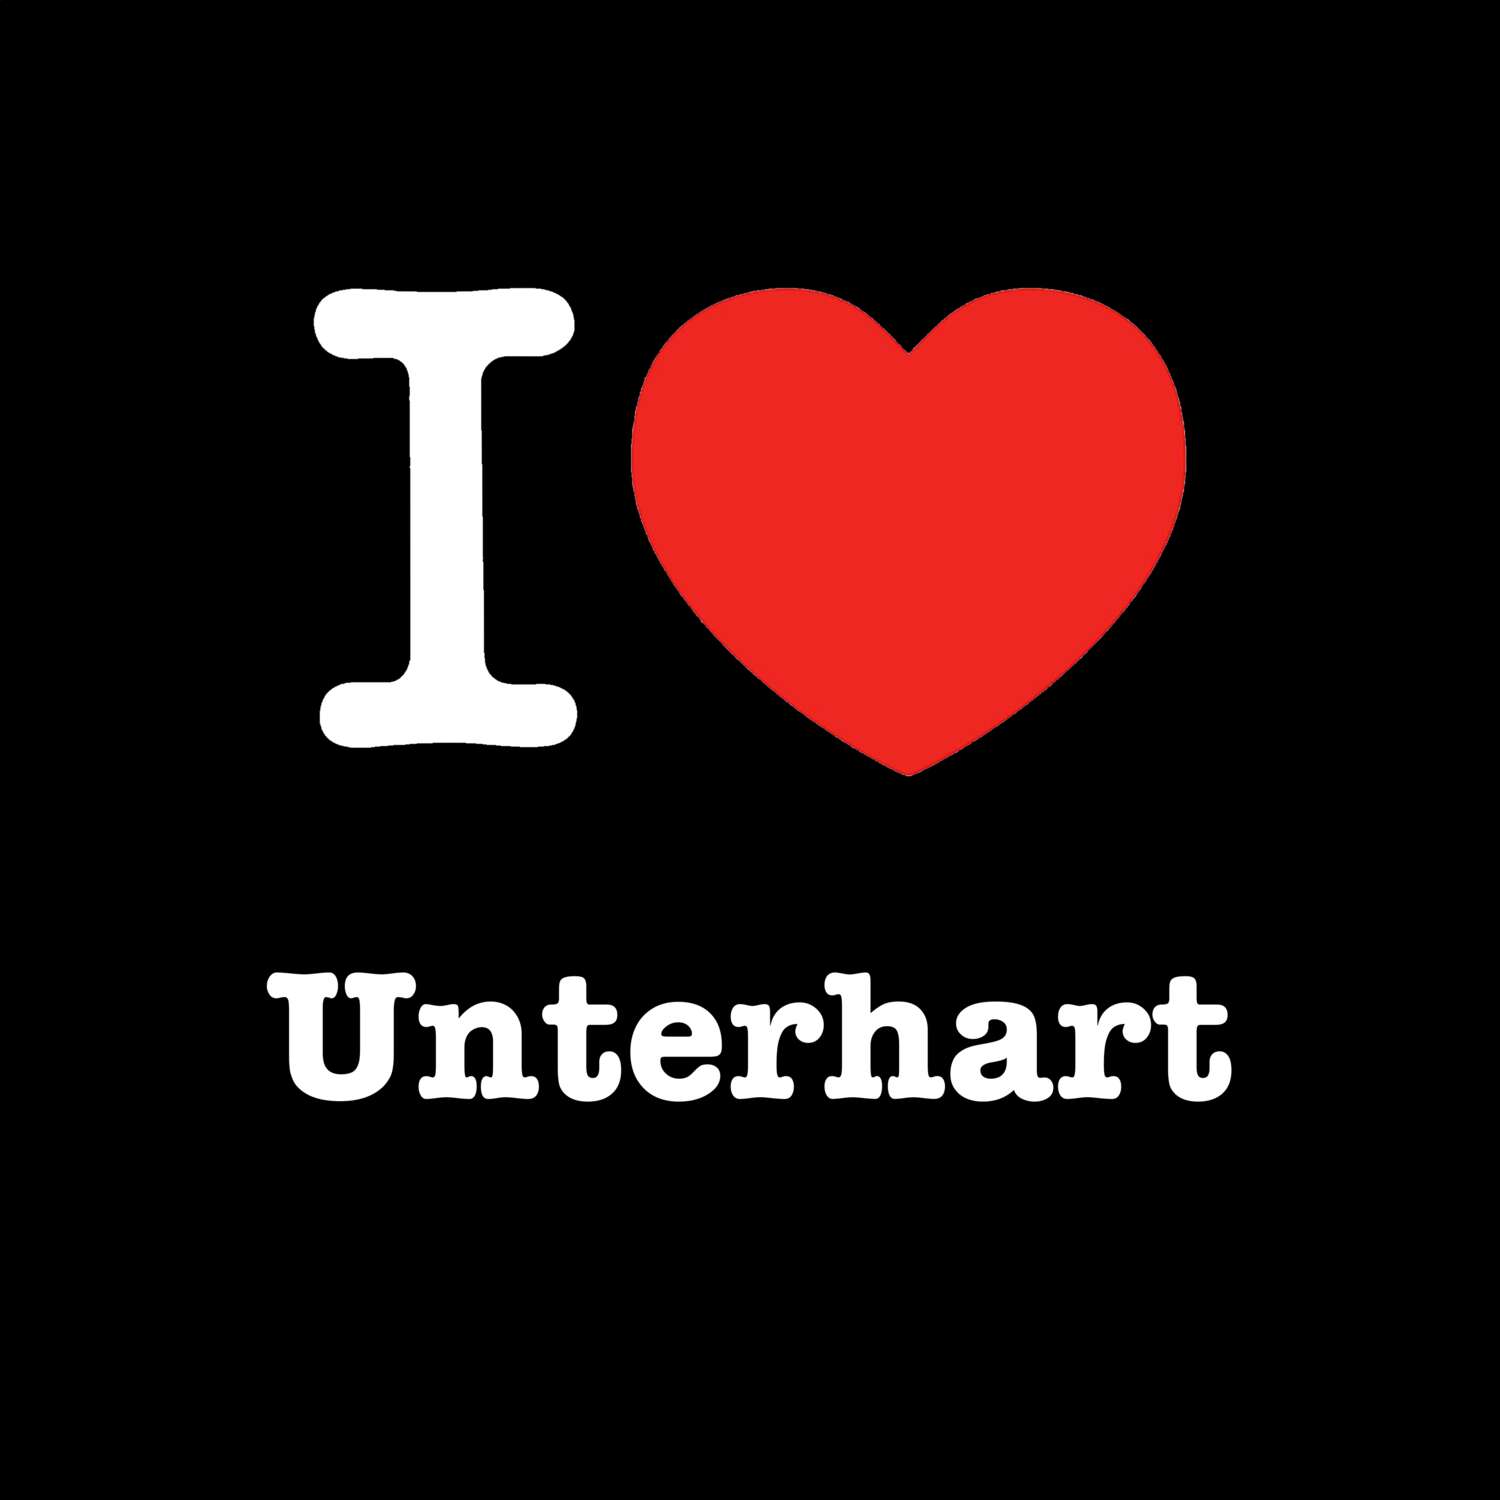 Unterhart T-Shirt »I love«